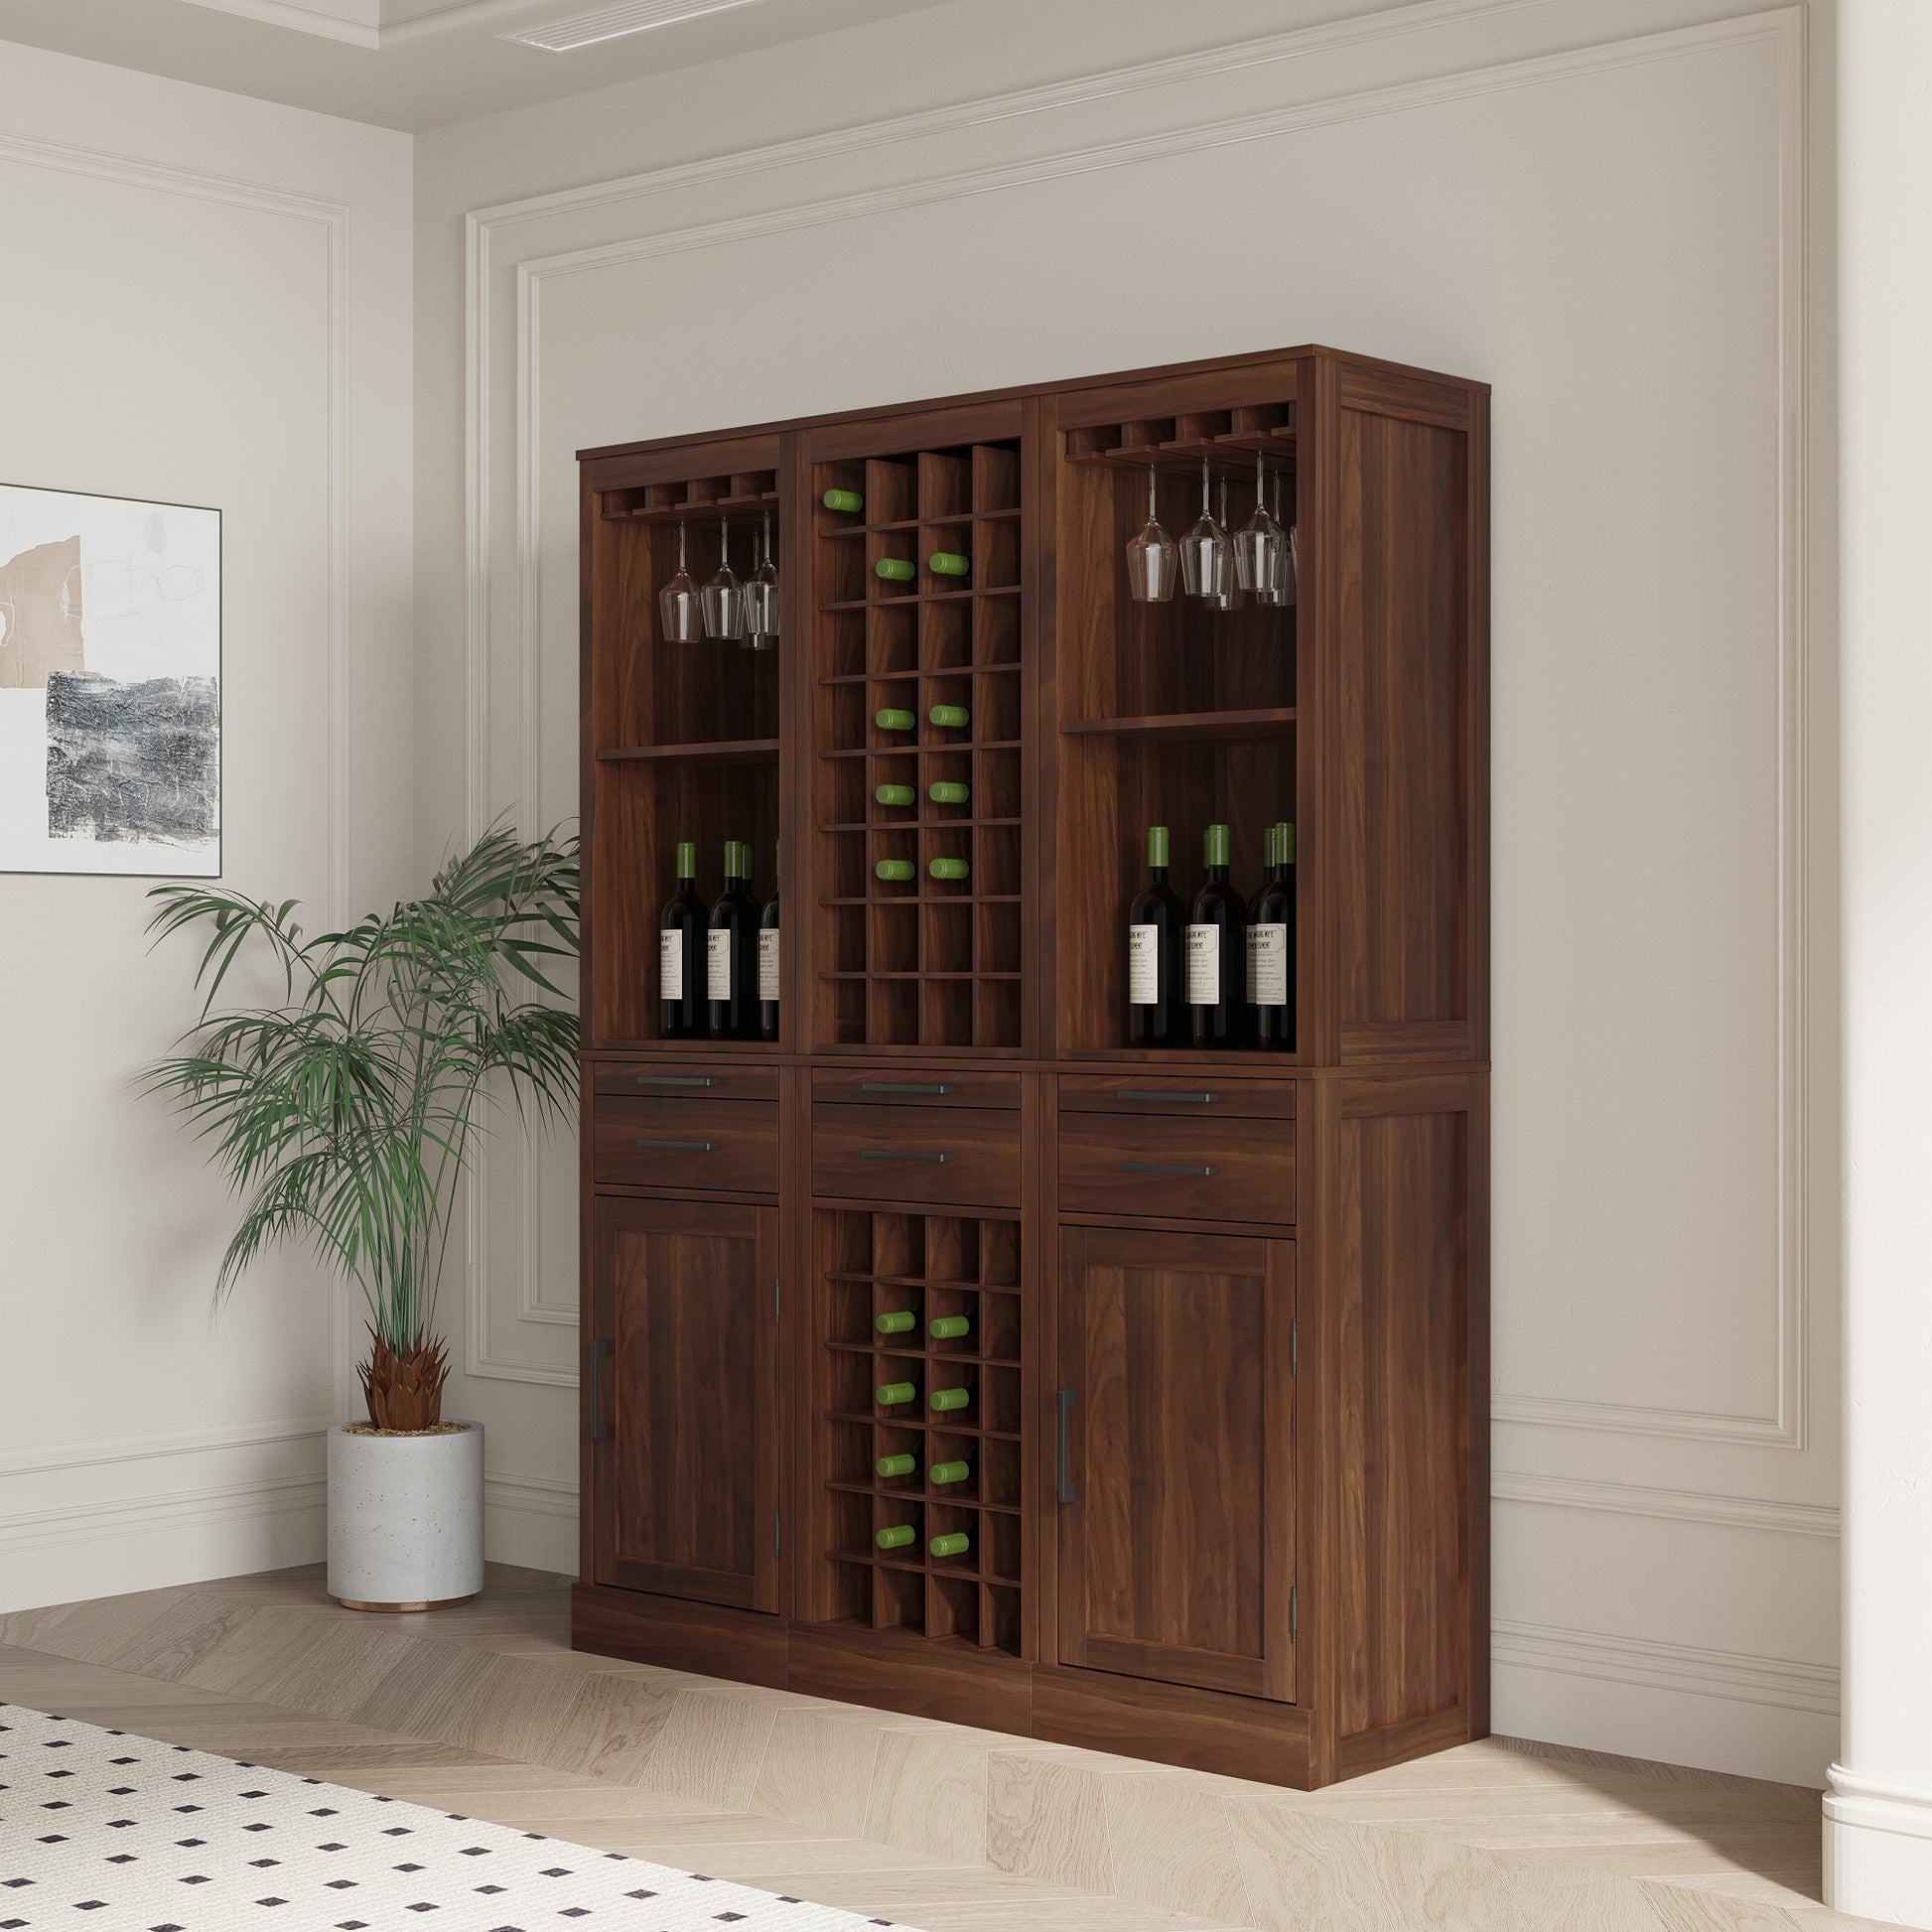 Brown walnut color modular wine bar Cabinet with walnut brown-mdf